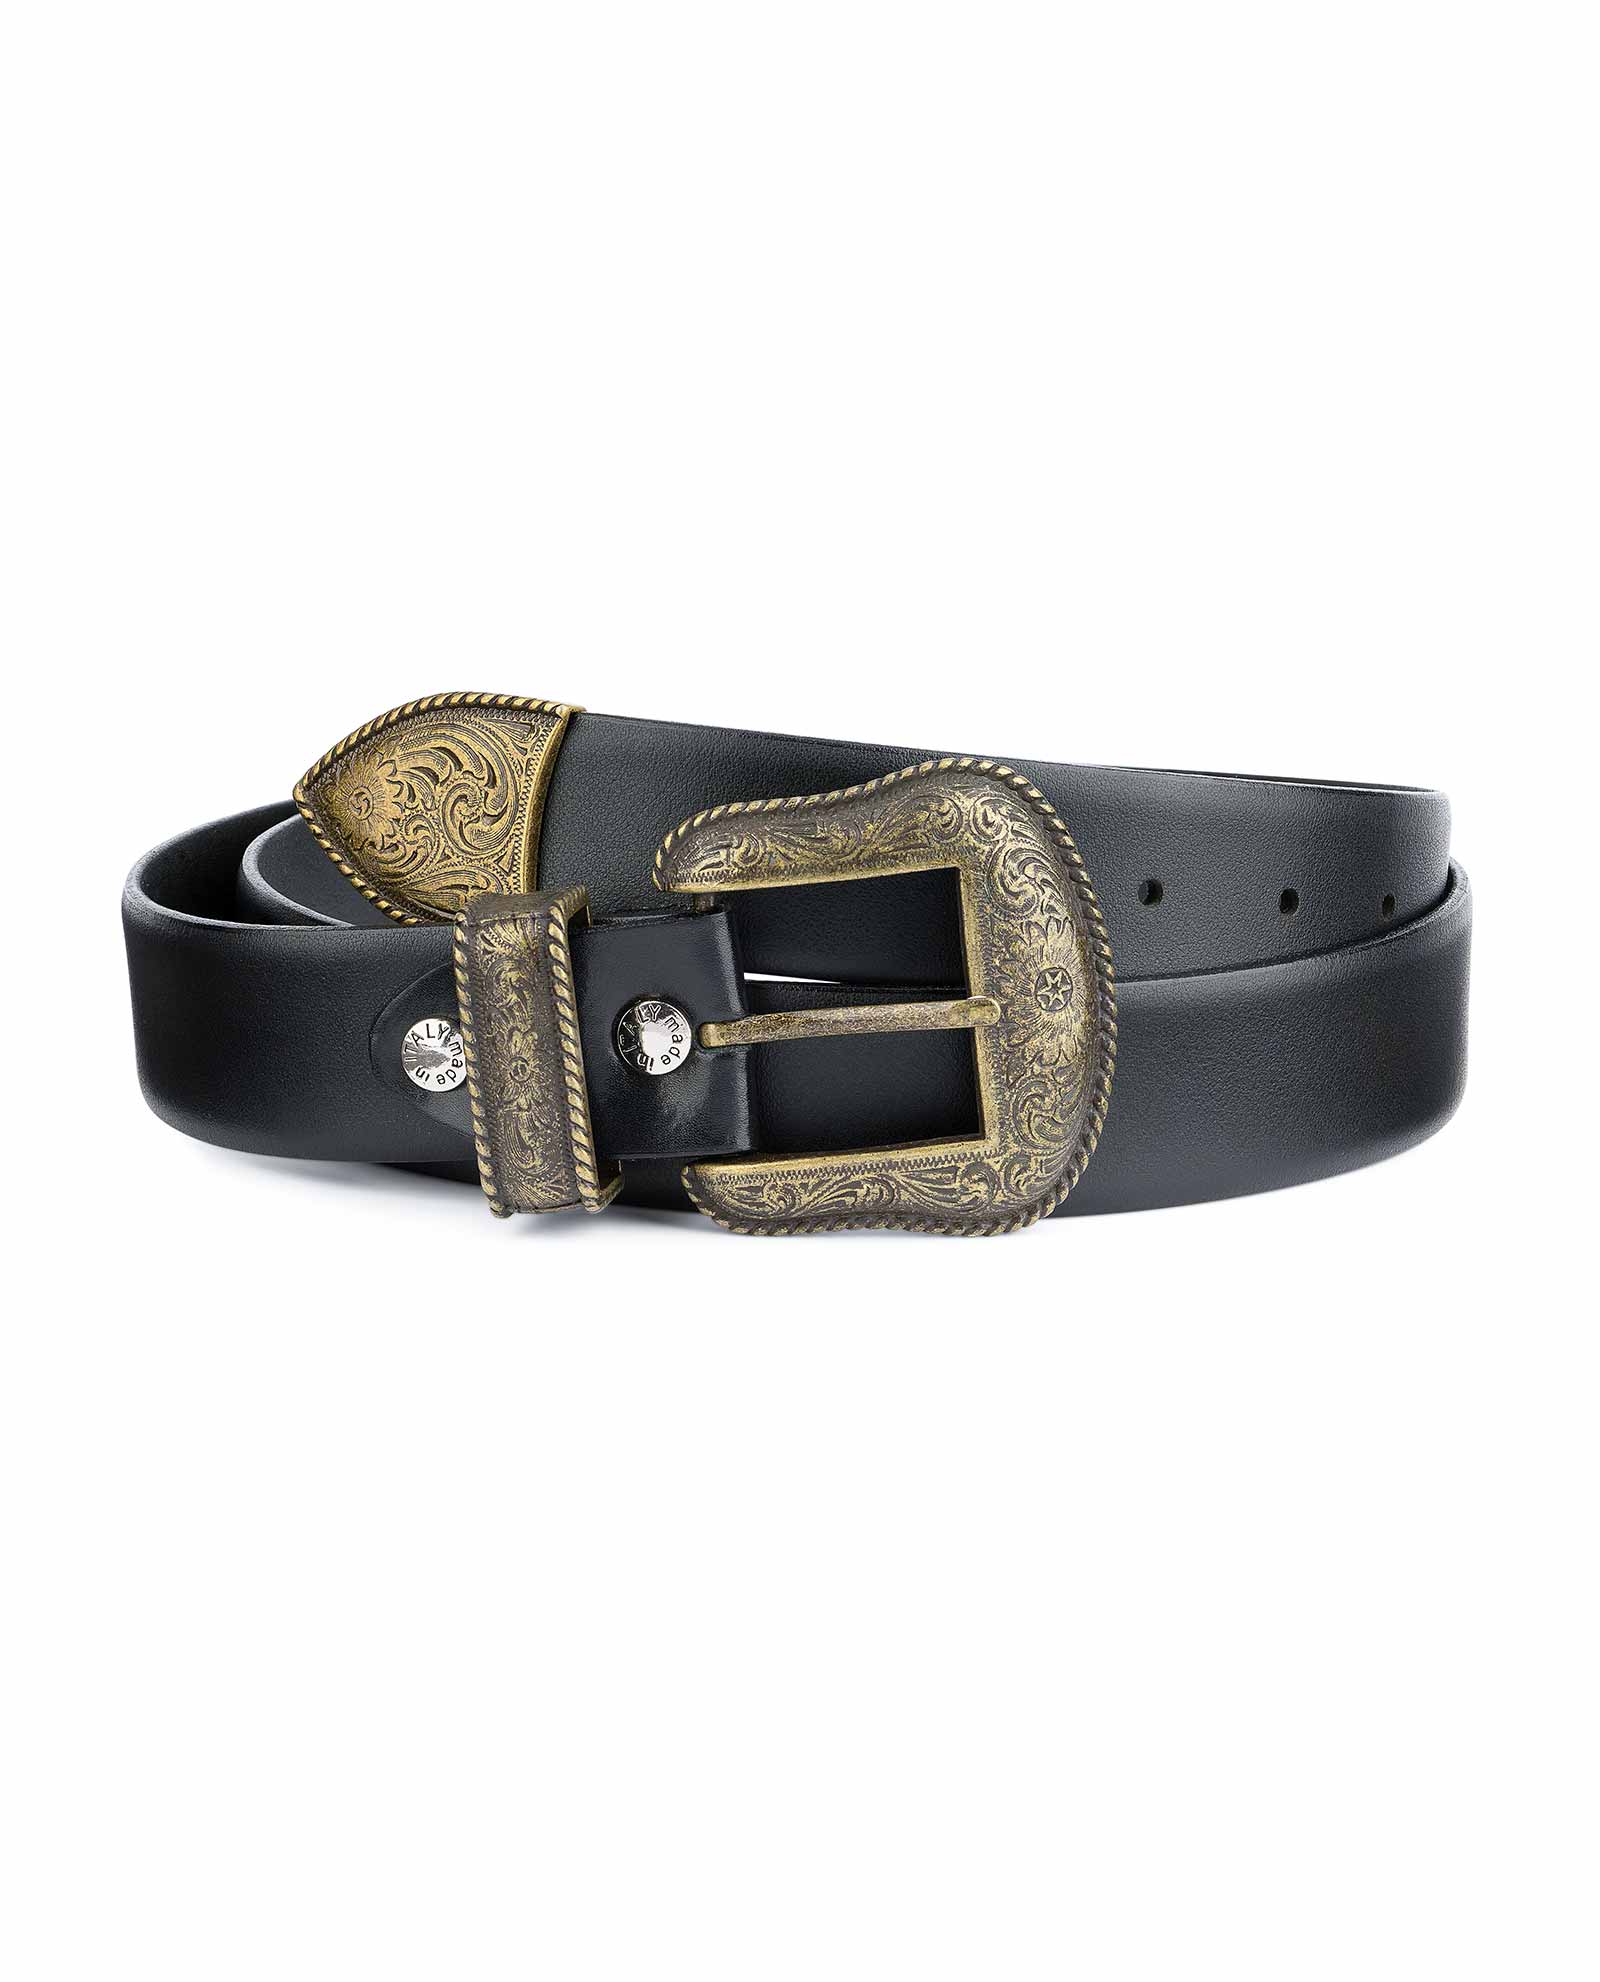 Western 3 piece golden Buckle Set in Rhinostone leather belt buckle cowboy  40mm 